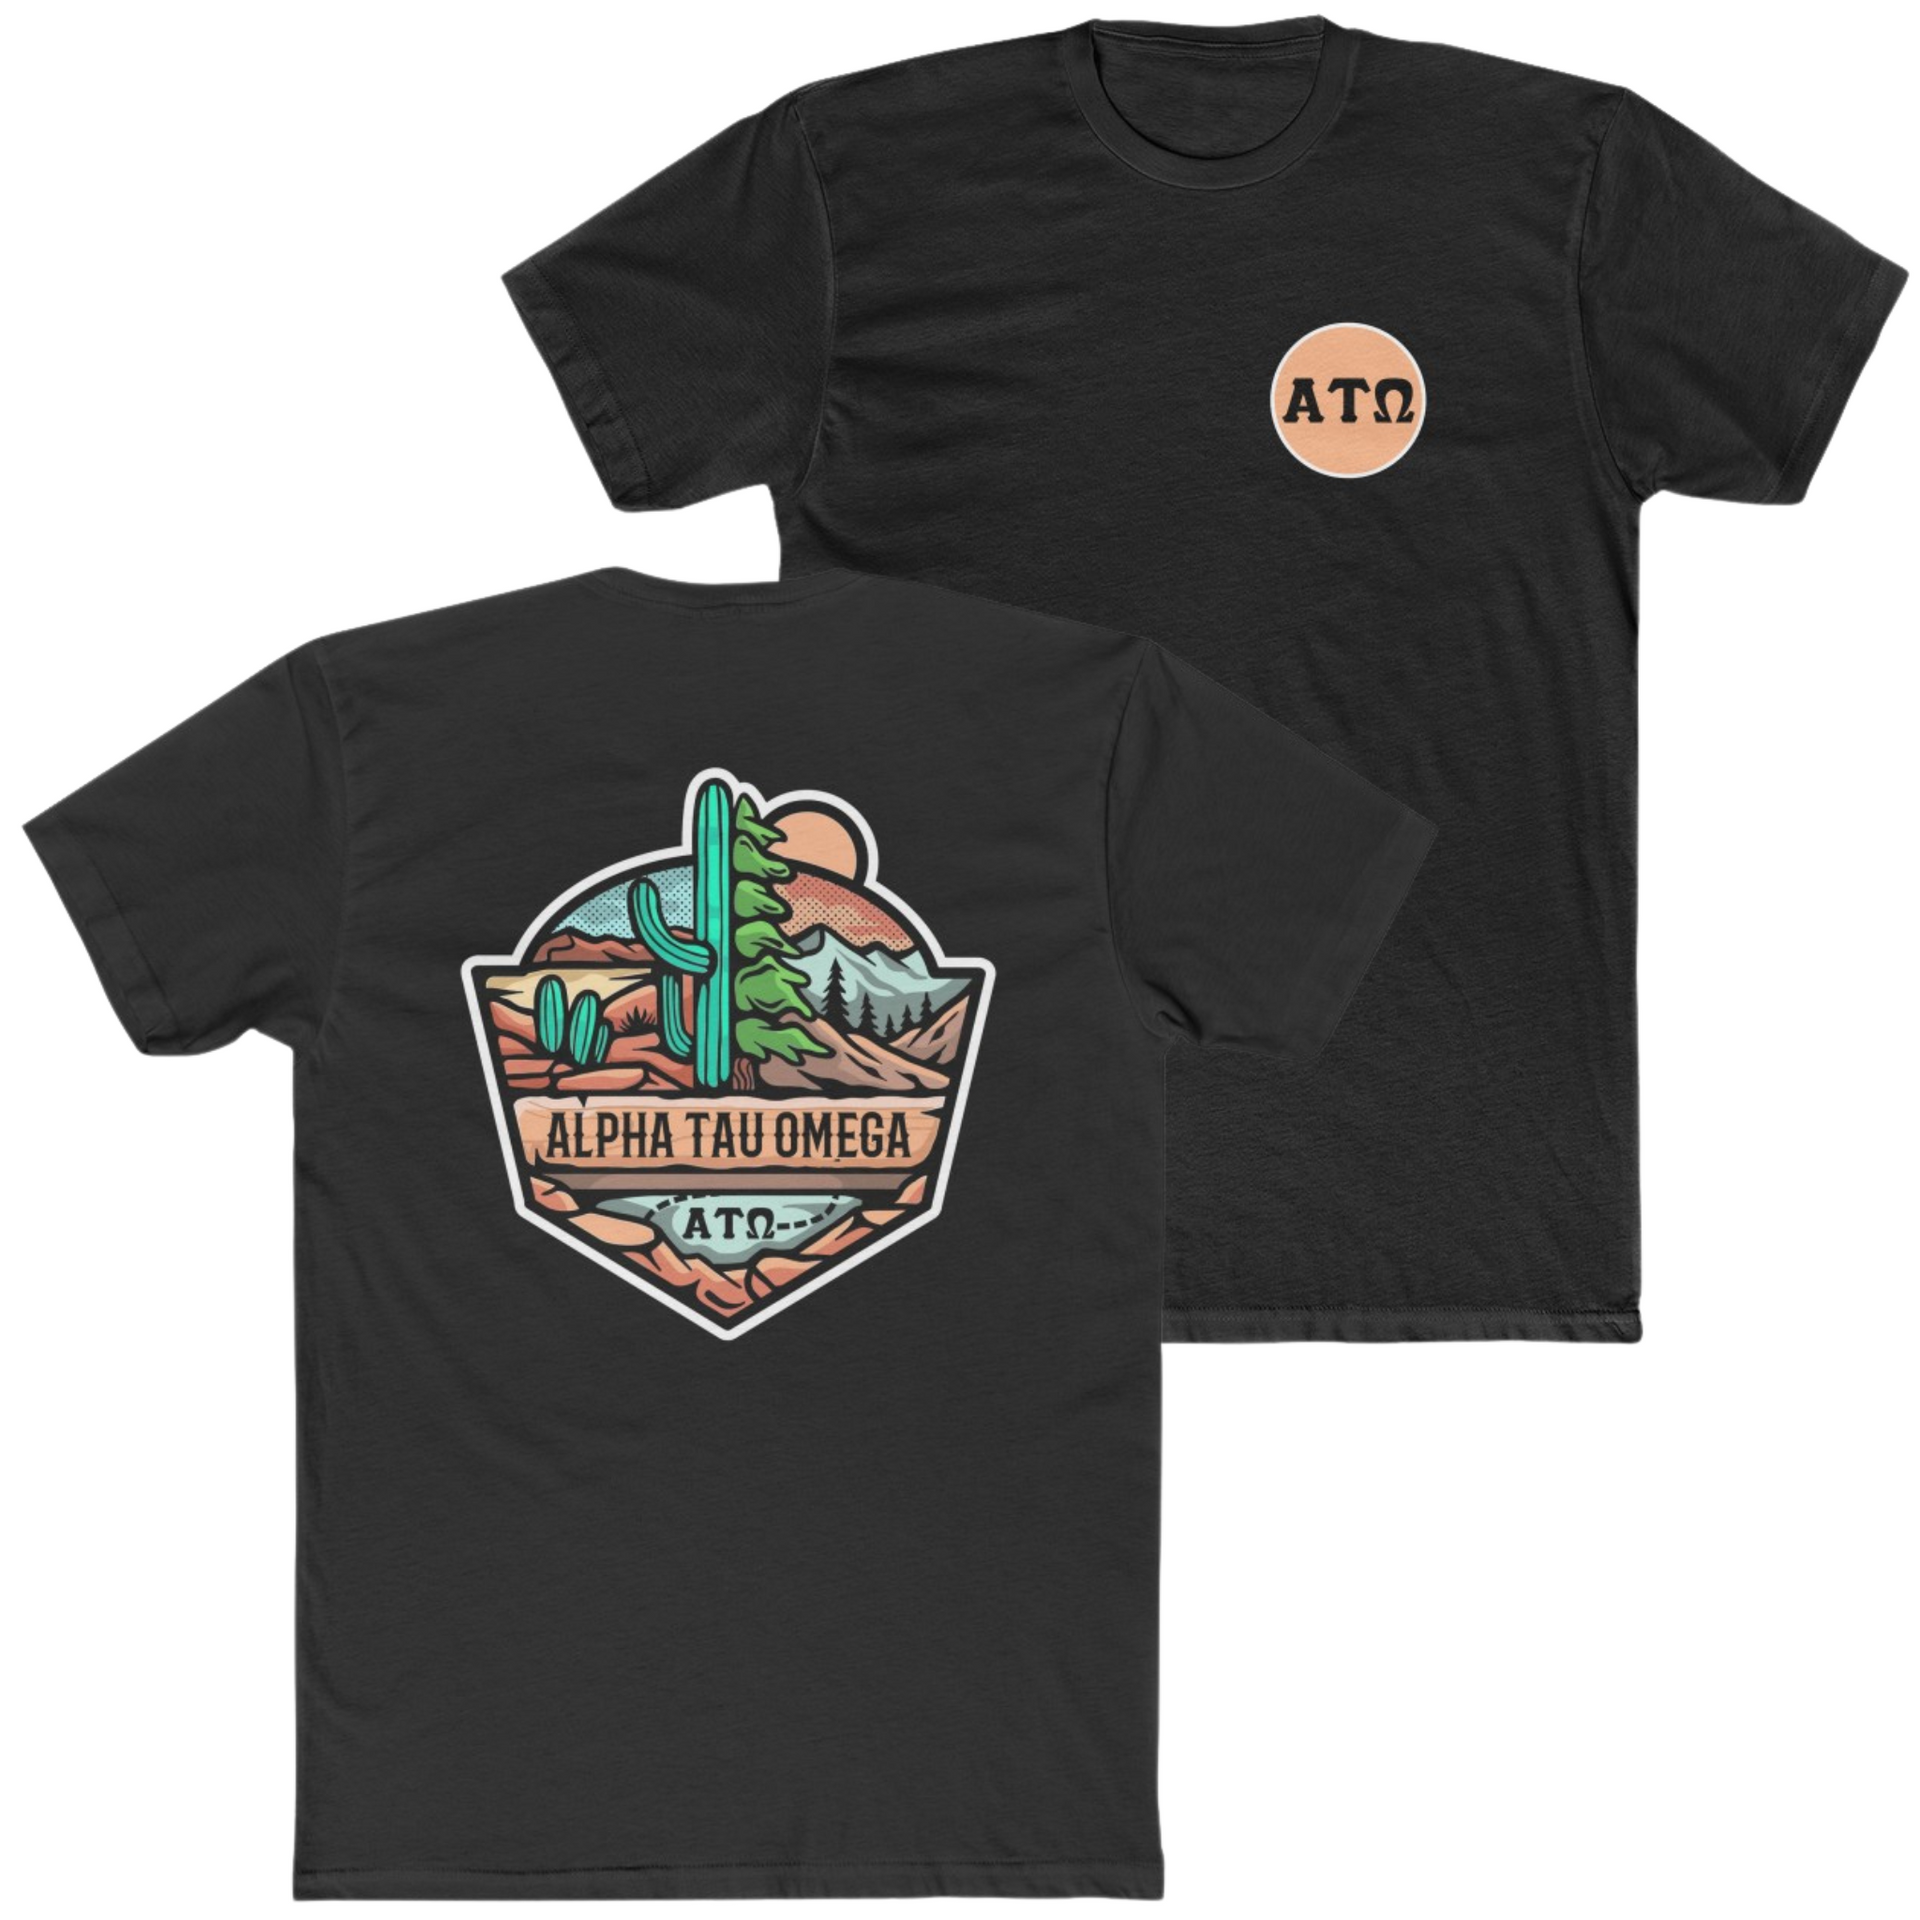 Black Alpha Tau Omega Graphic T-Shirt | Desert Mountains | Alpha Tau Omega Fraternity Merch 